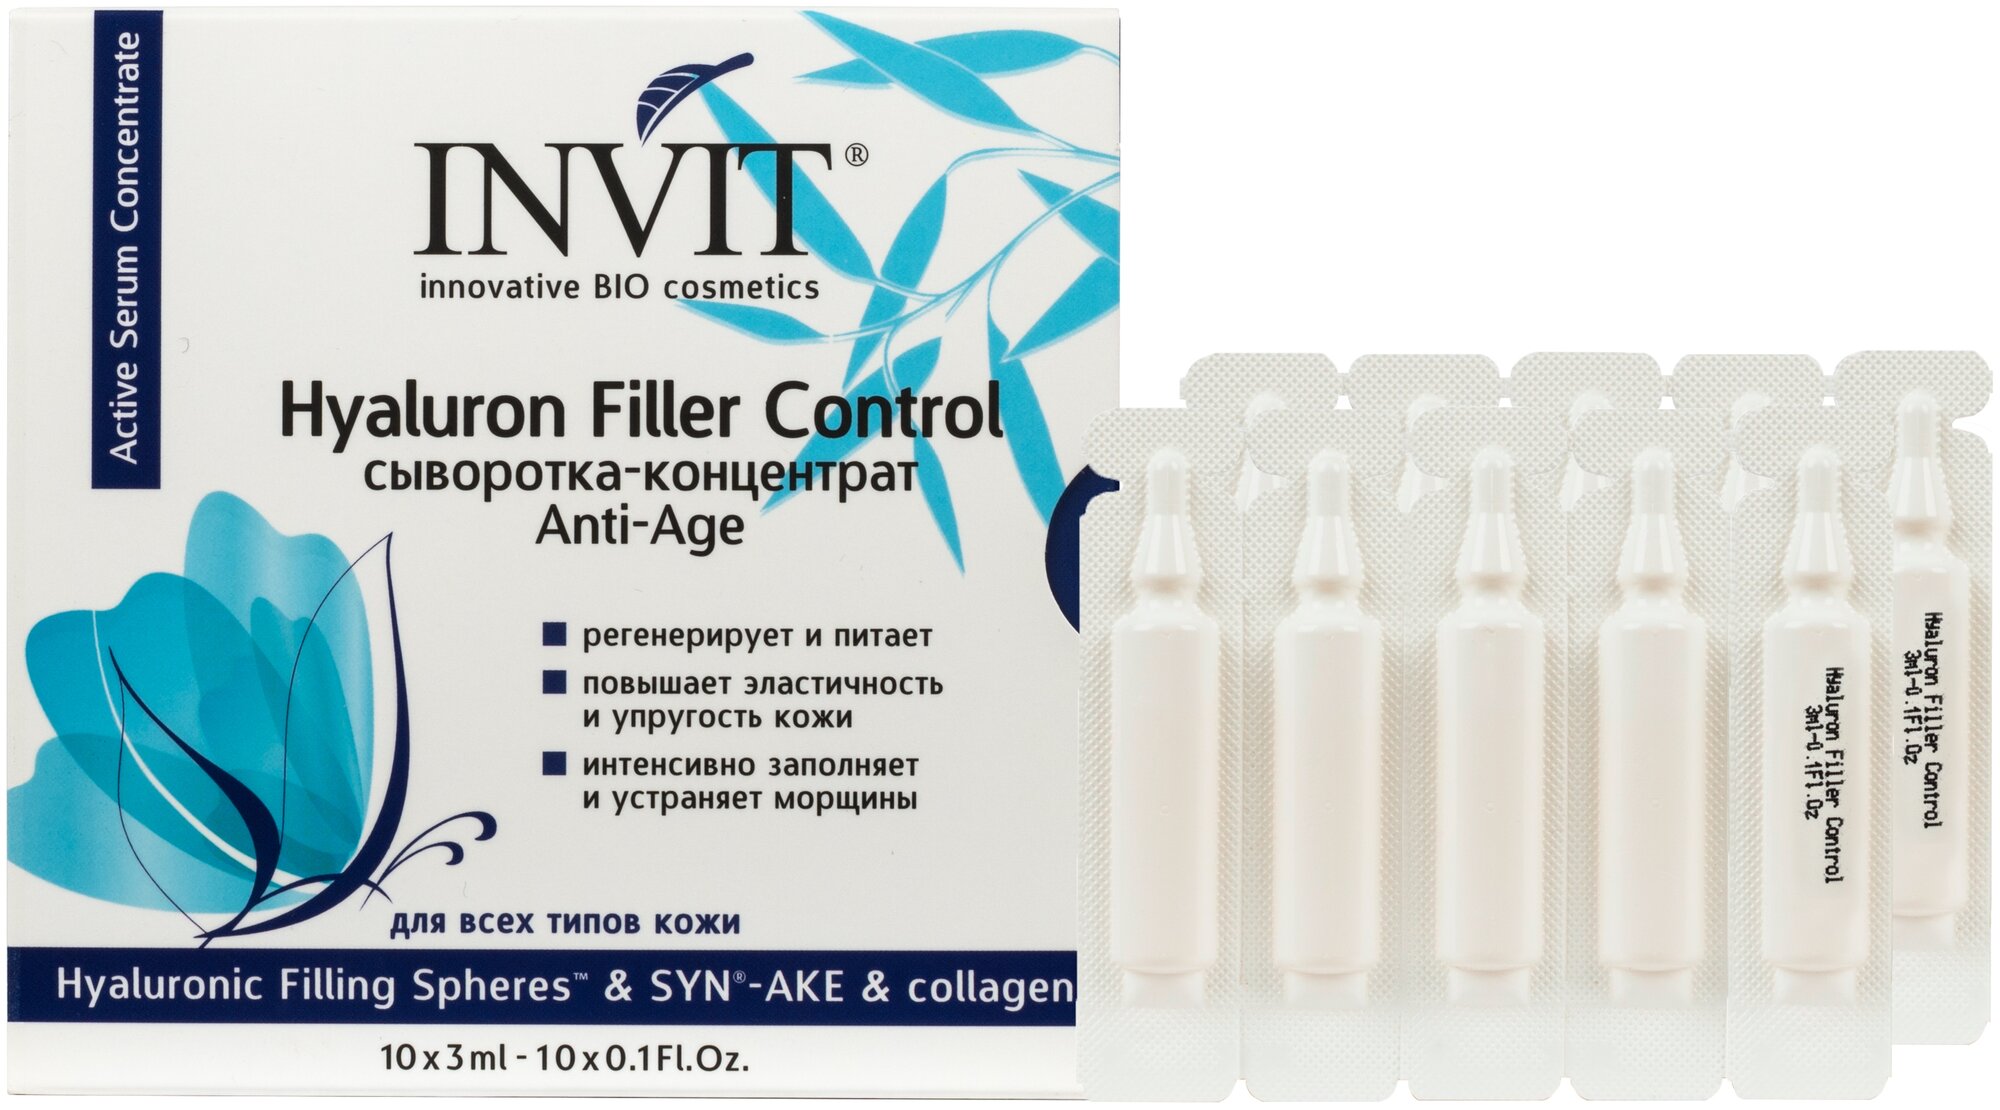 INVIT сыворотка-концентрат для лица Hyaluron Filler Control, 3 мл, 10 шт.